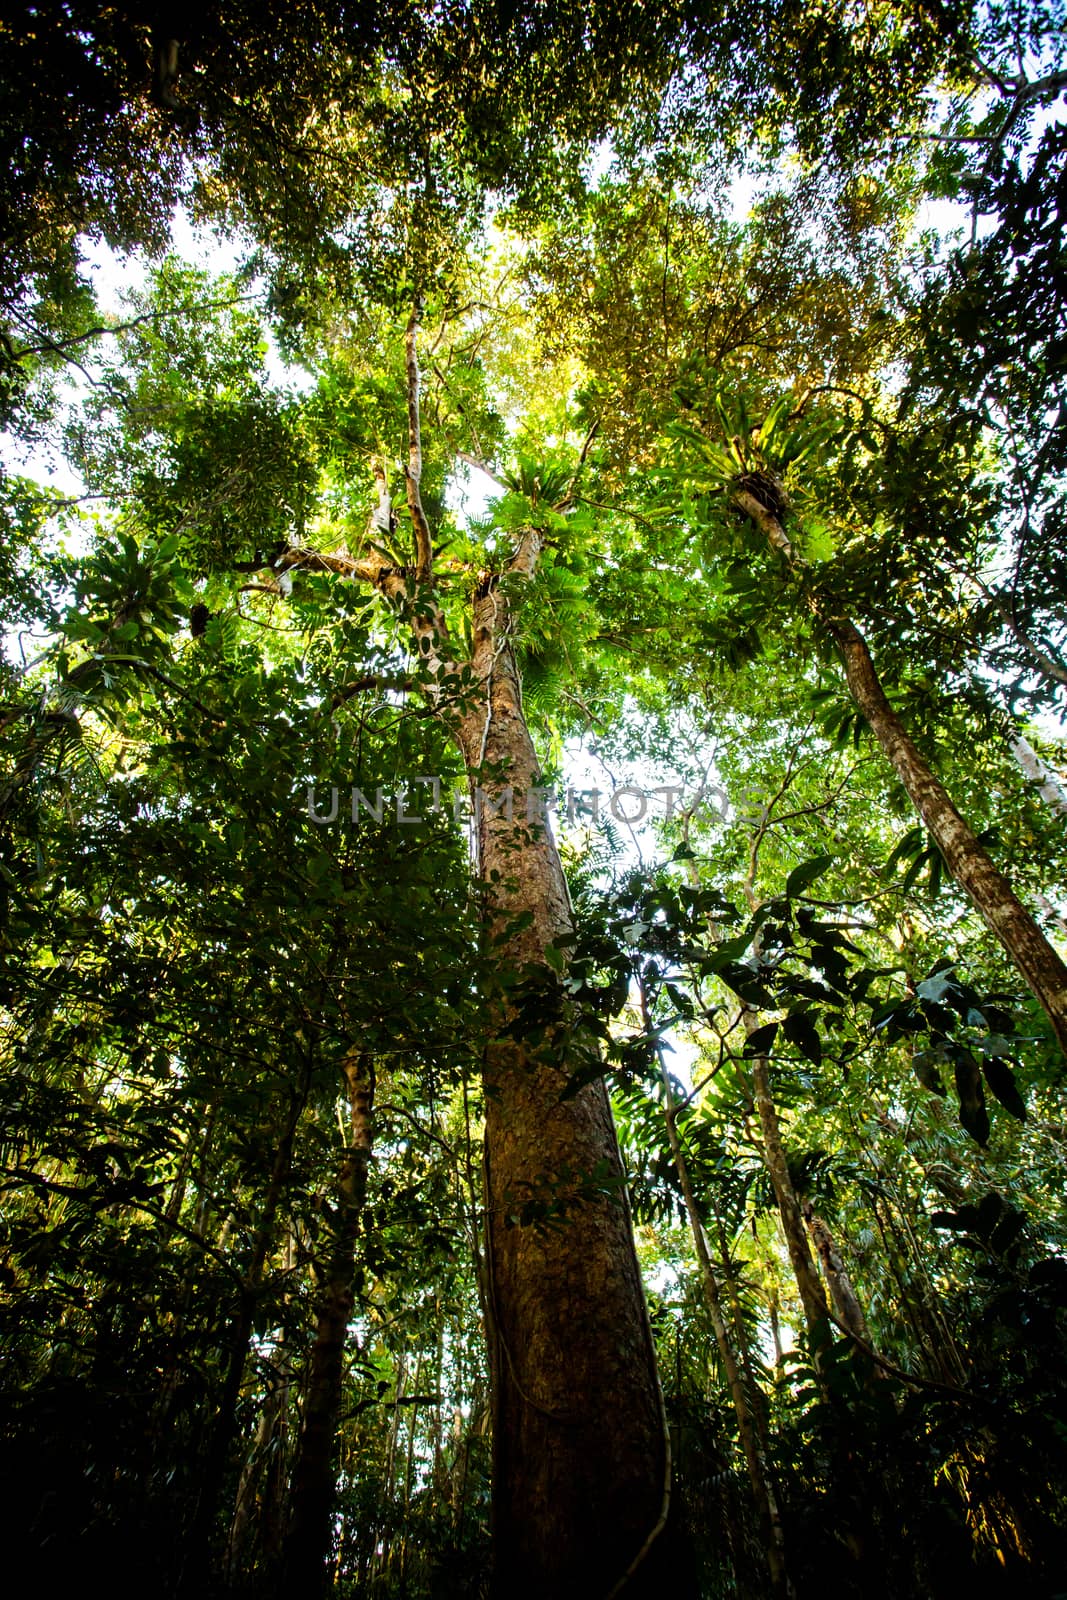 The famous Jindalba Boardwalk thru ancient rainforest in the Daintree region of Queensland, Australia